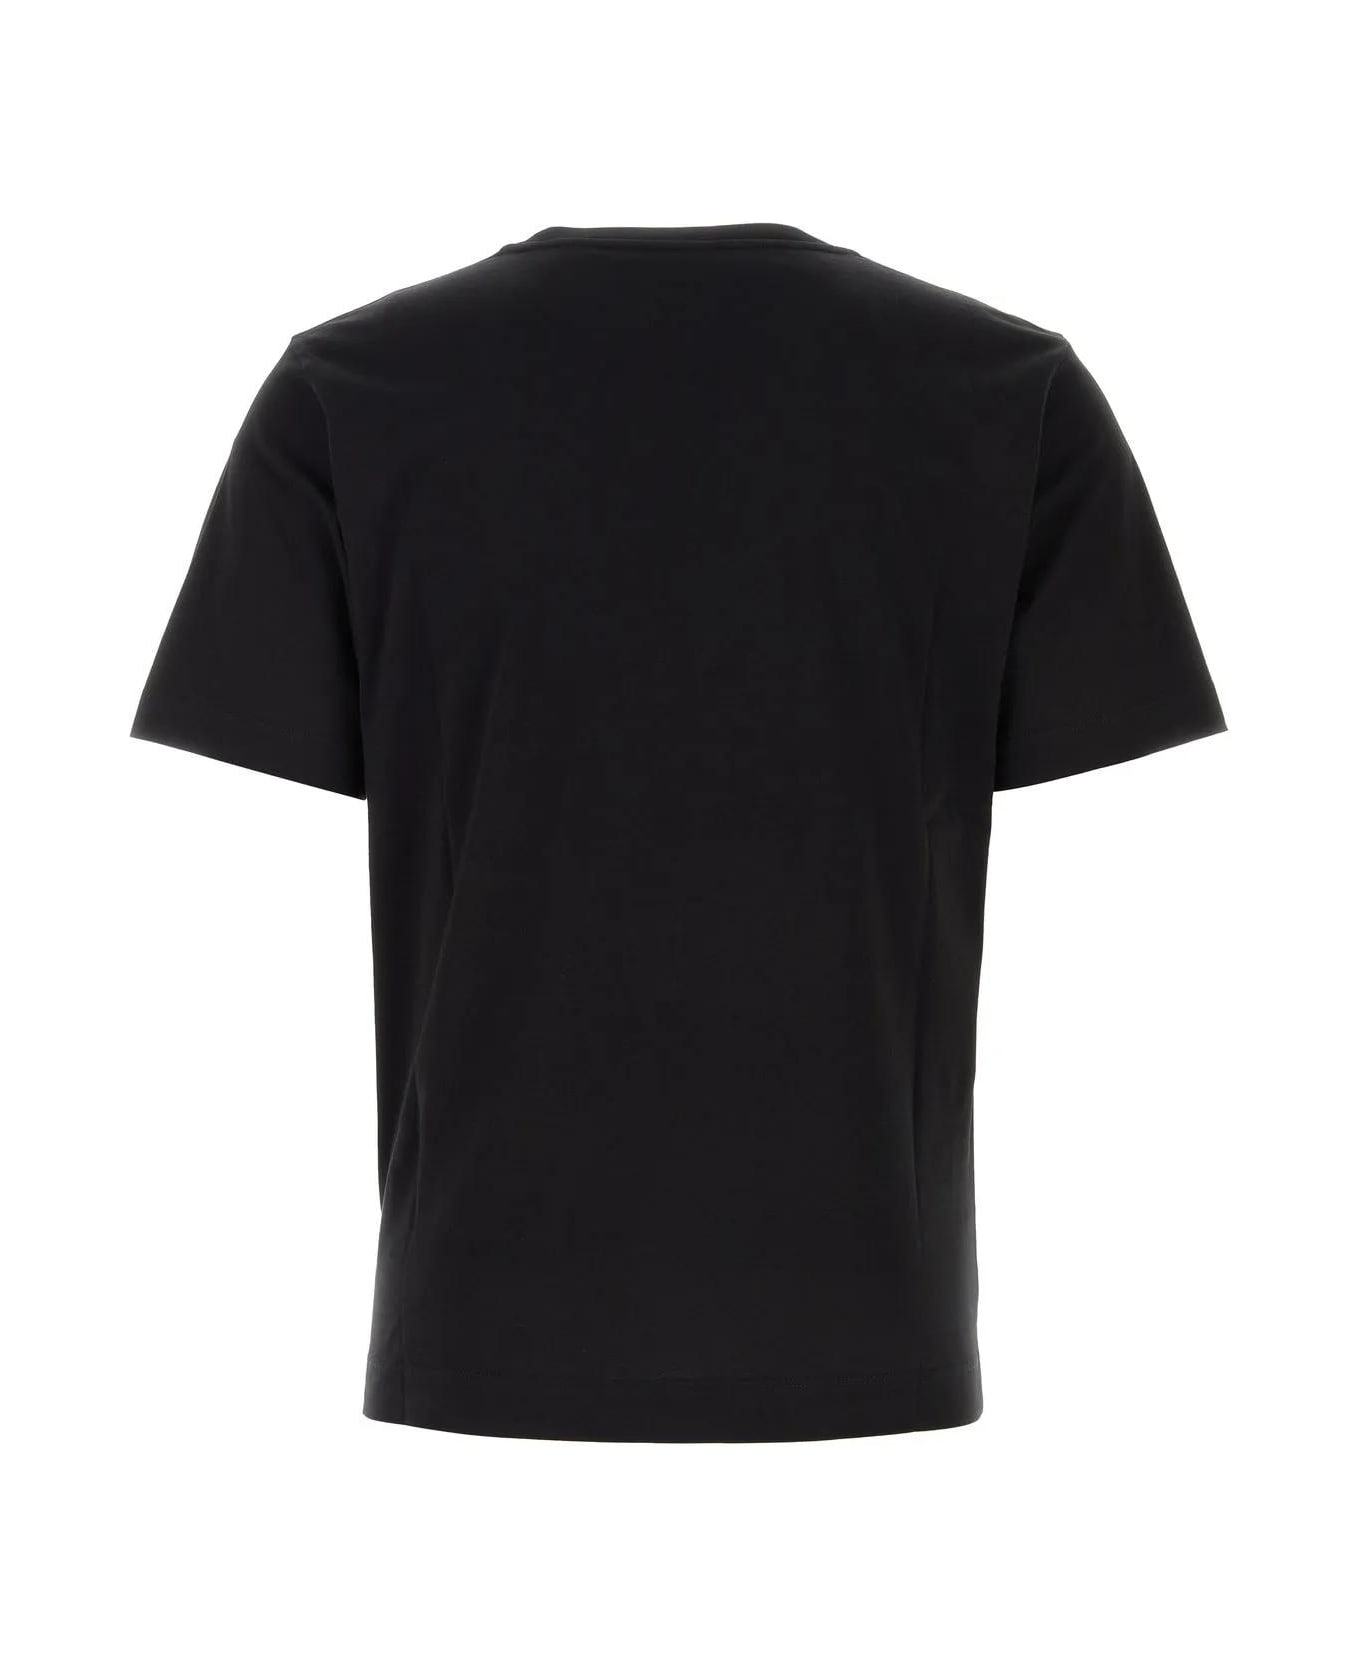 Dries Van Noten Black Cotton T-shirt - Nero